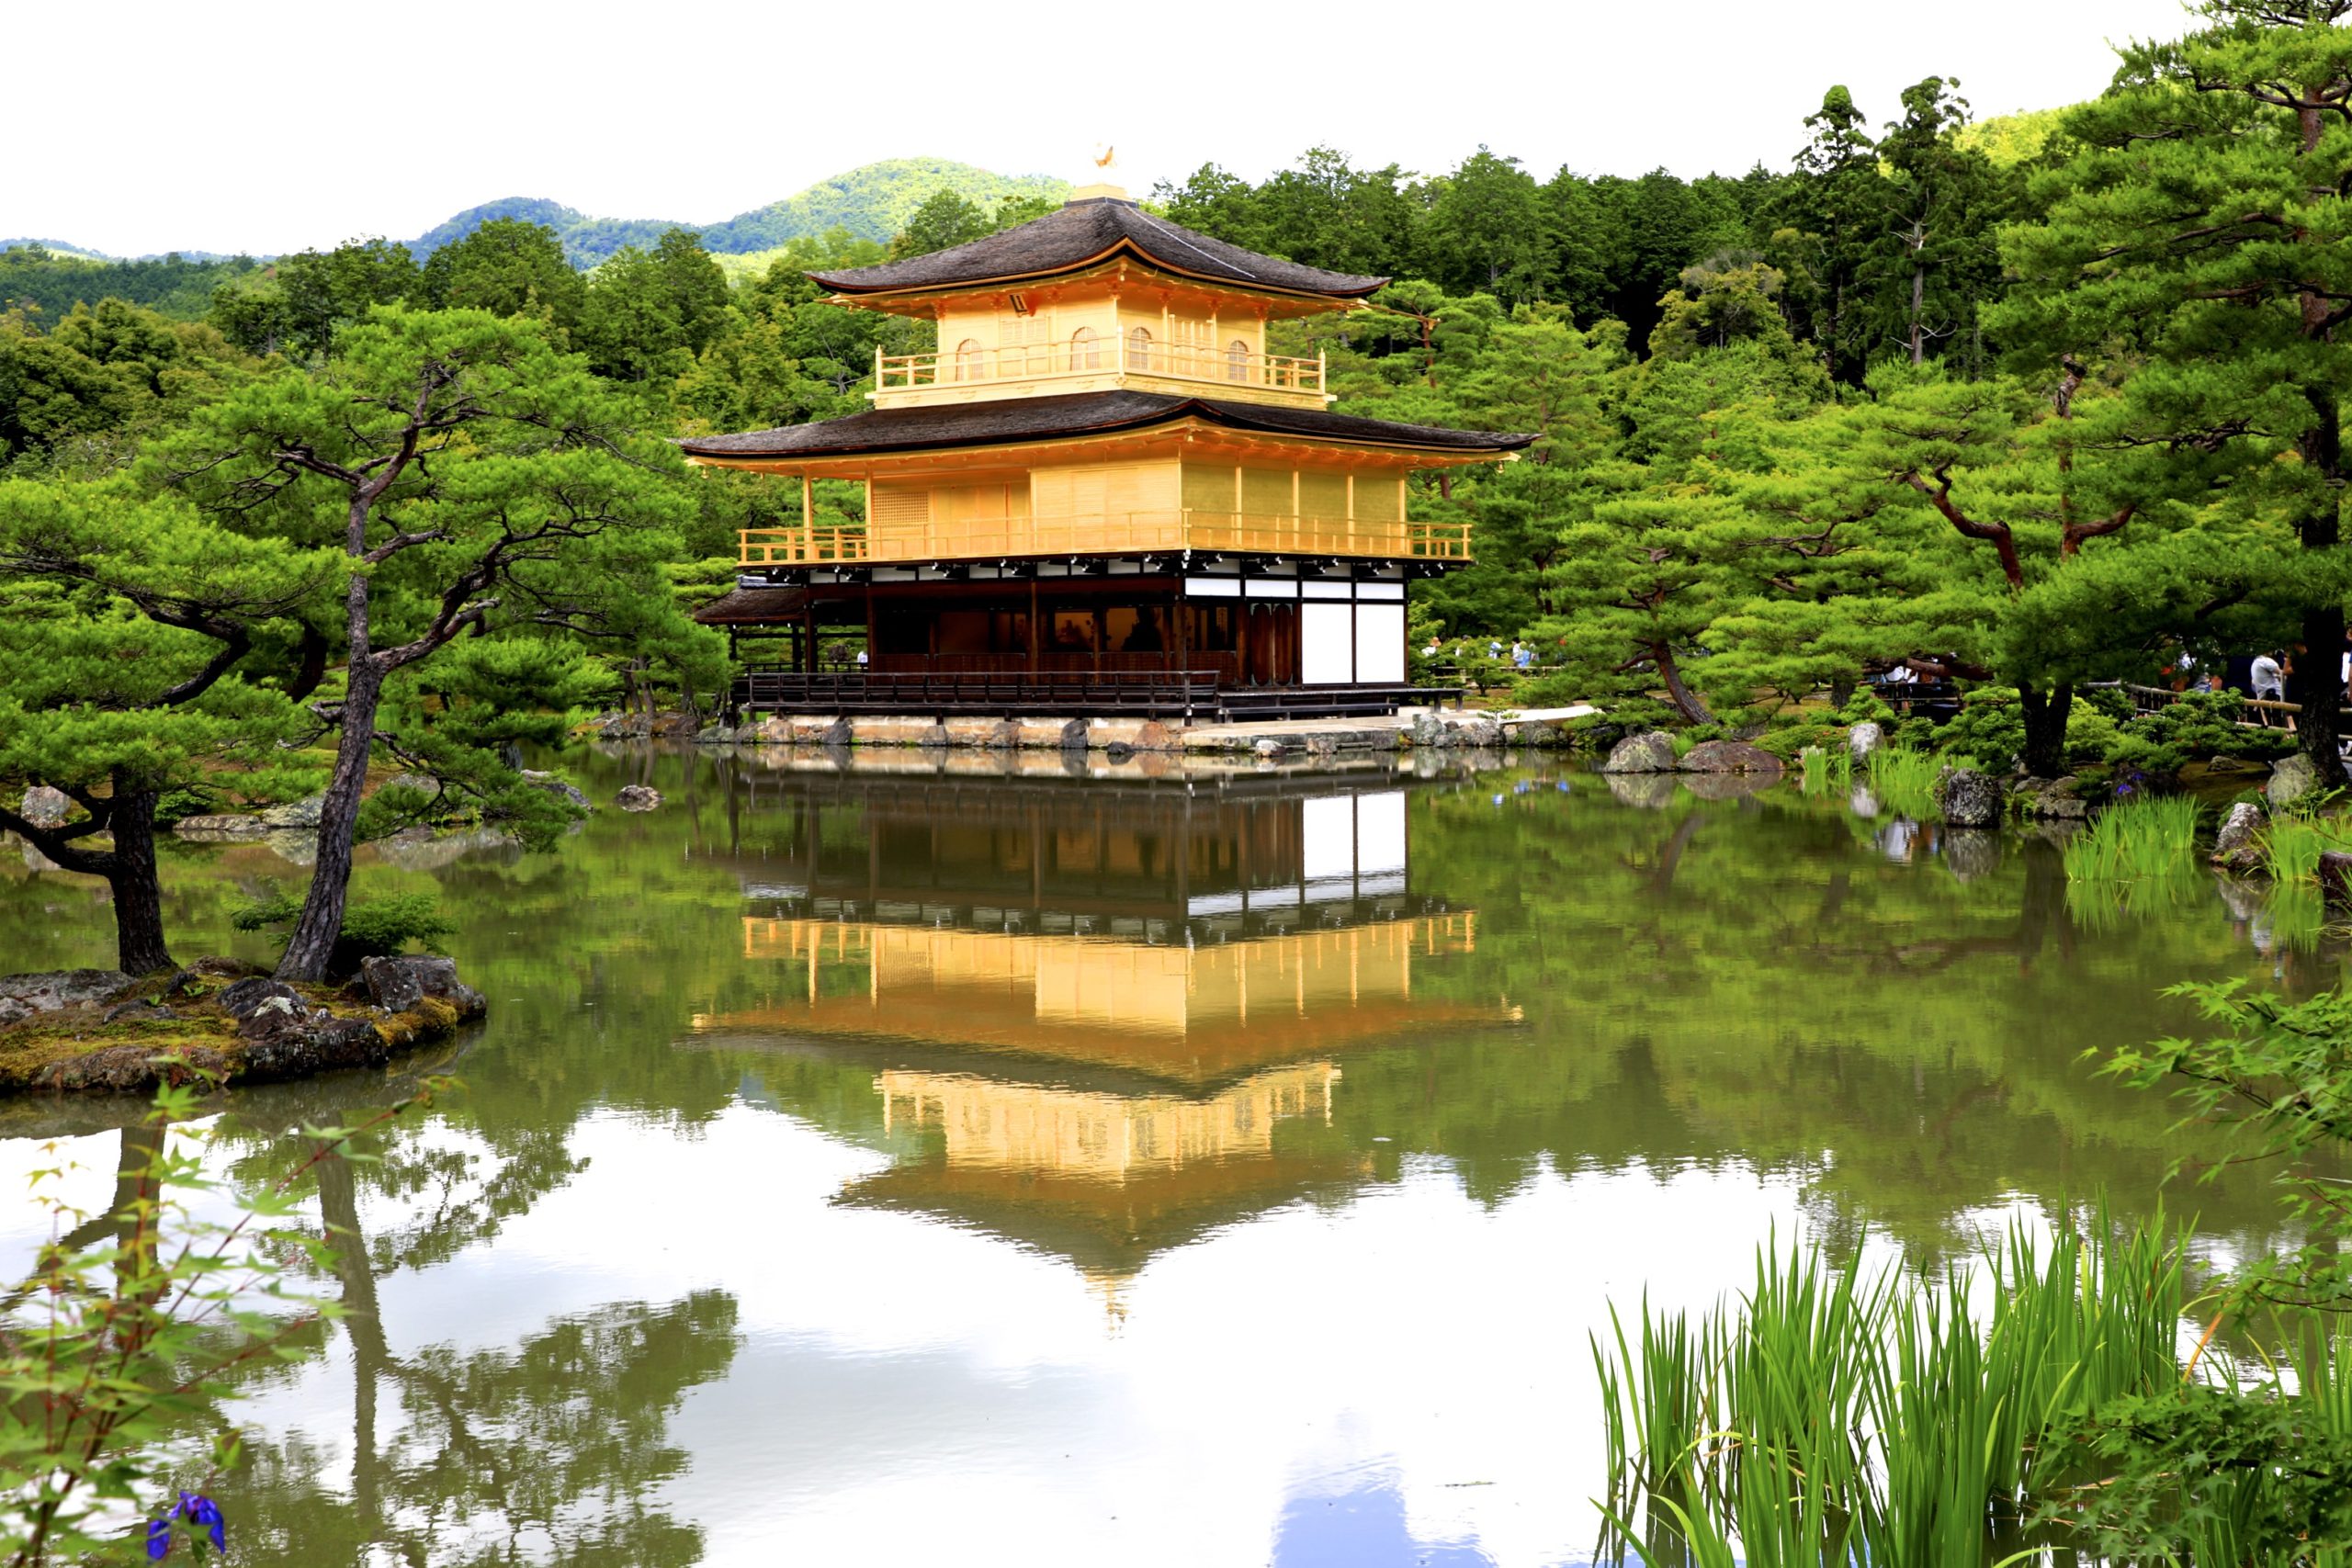  Kyoto, berceau culturel